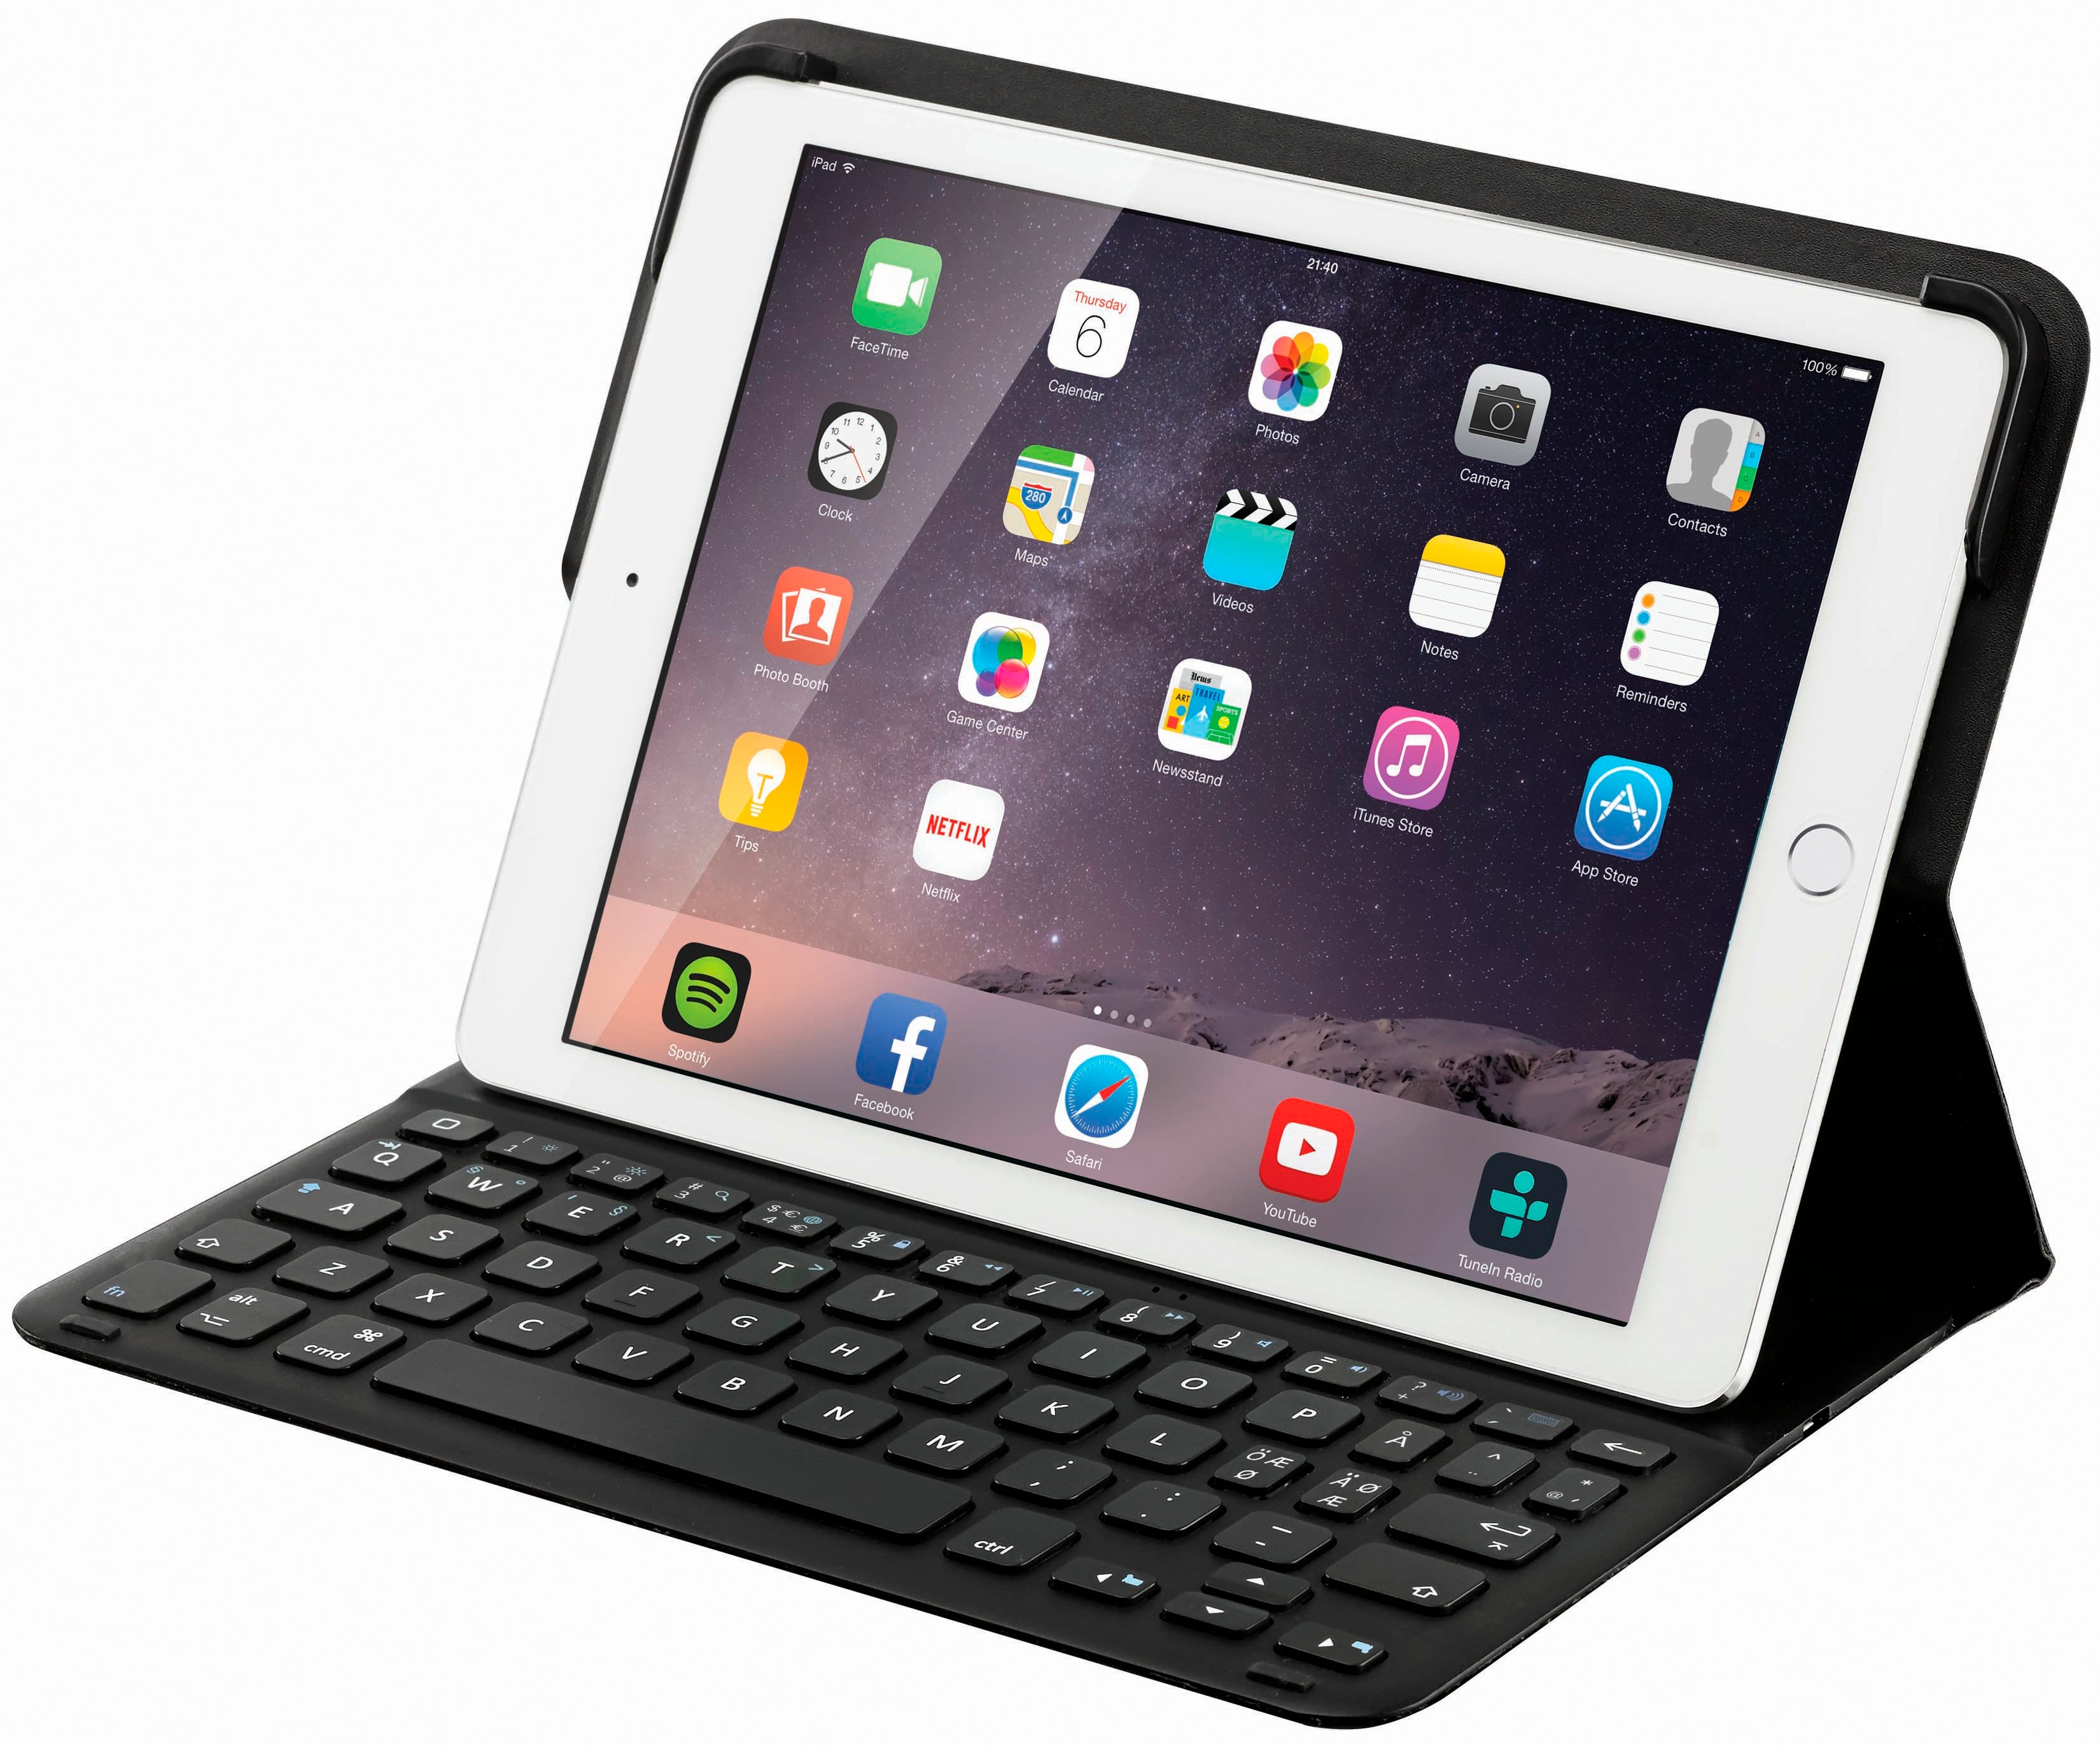 Sandstrøm iPad Air 2 Keyboard Folio (svart) - Tillbehör iPad ...